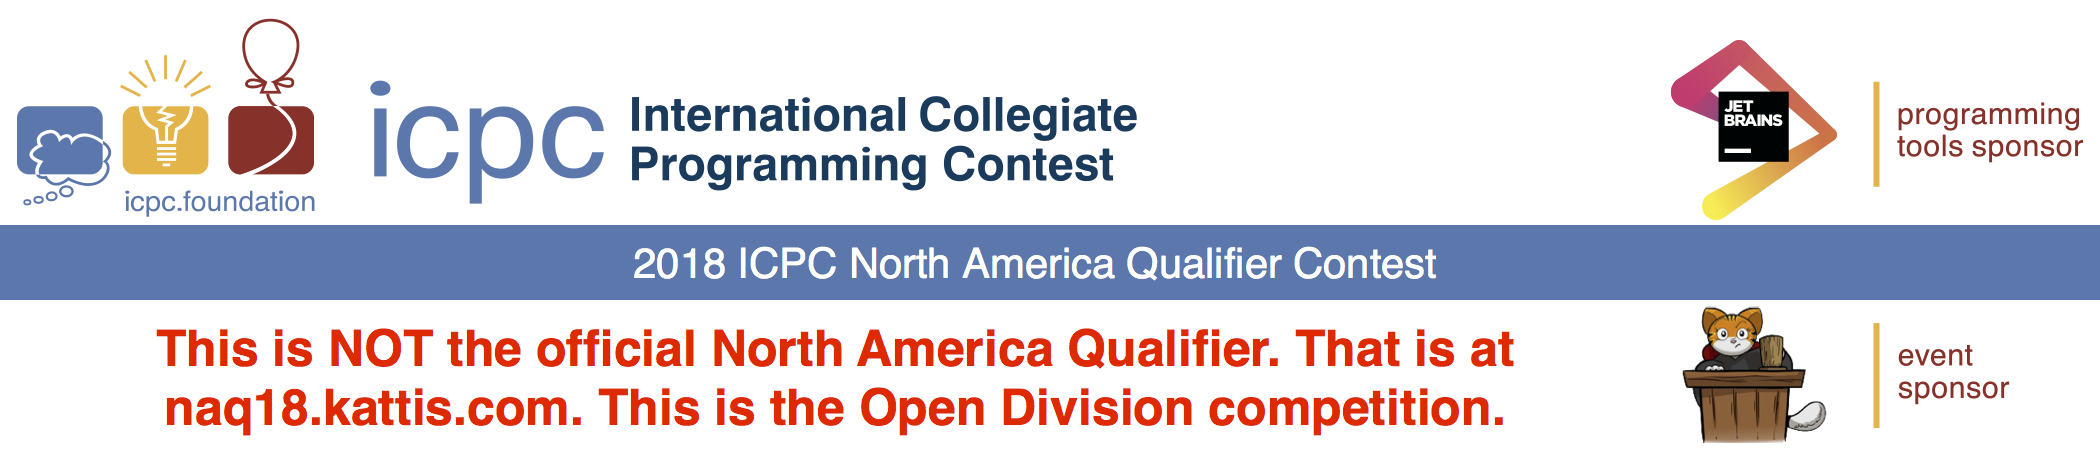 ICPC North America Qualifier 2018 Open